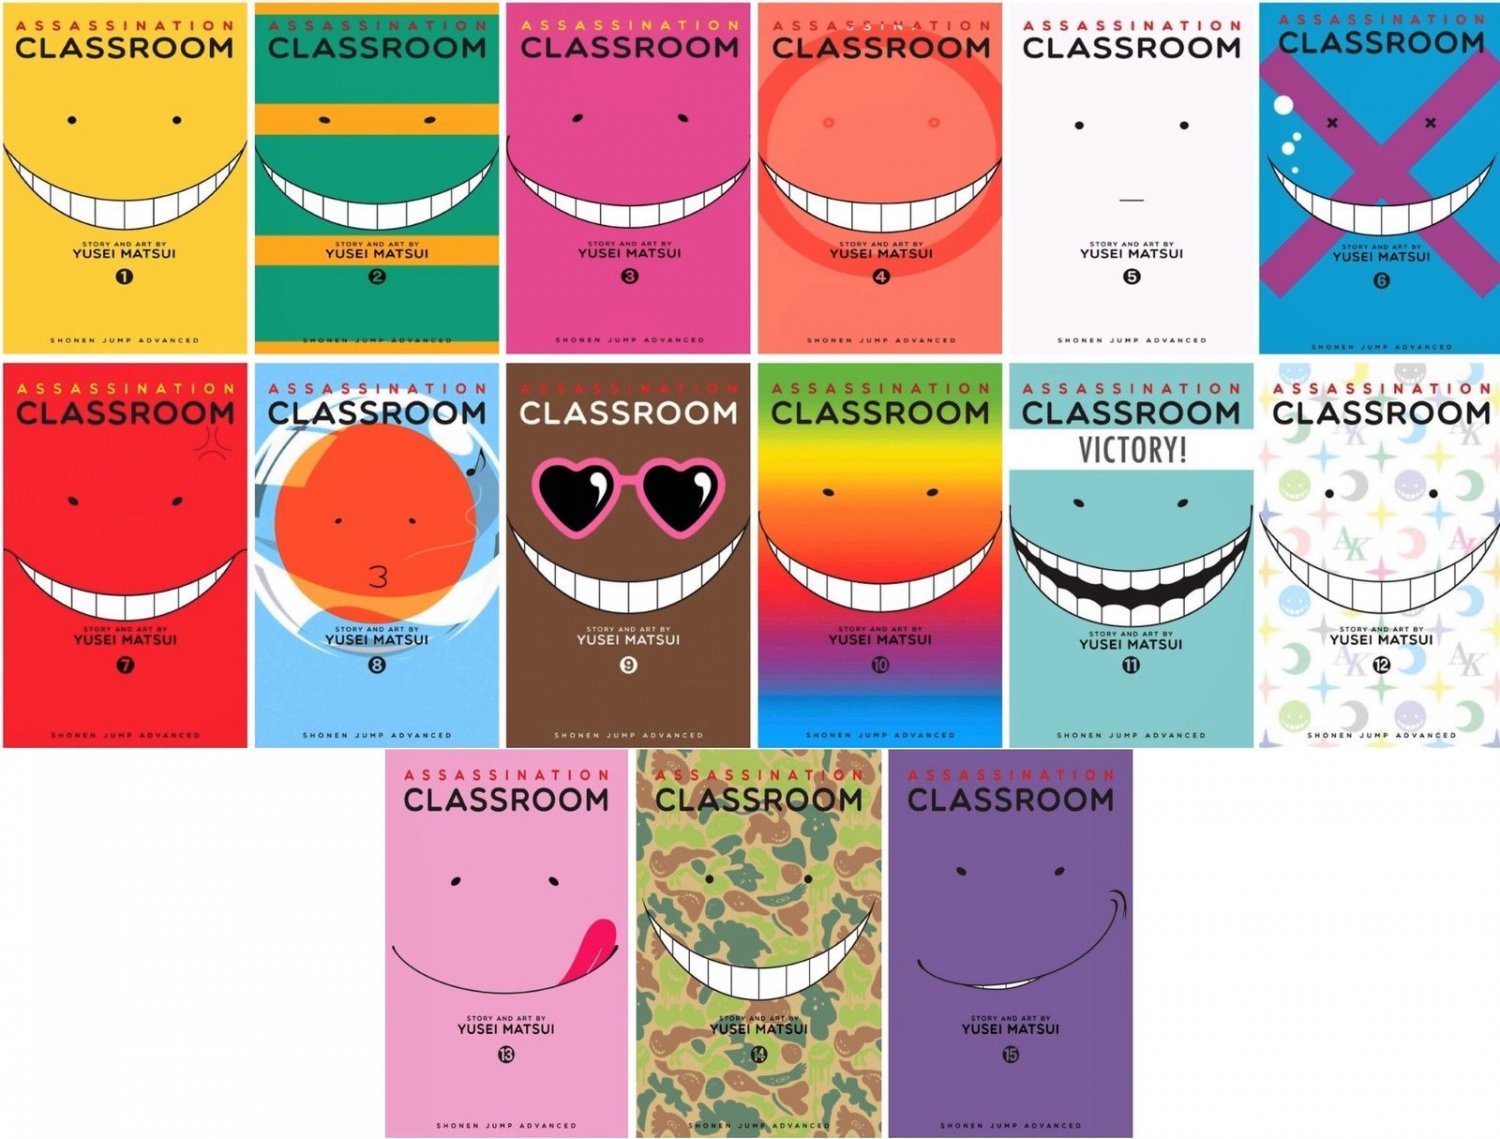 Assassination Classroom Manga Series Collection Set Books 1 15 By Yusei Matsui 6317